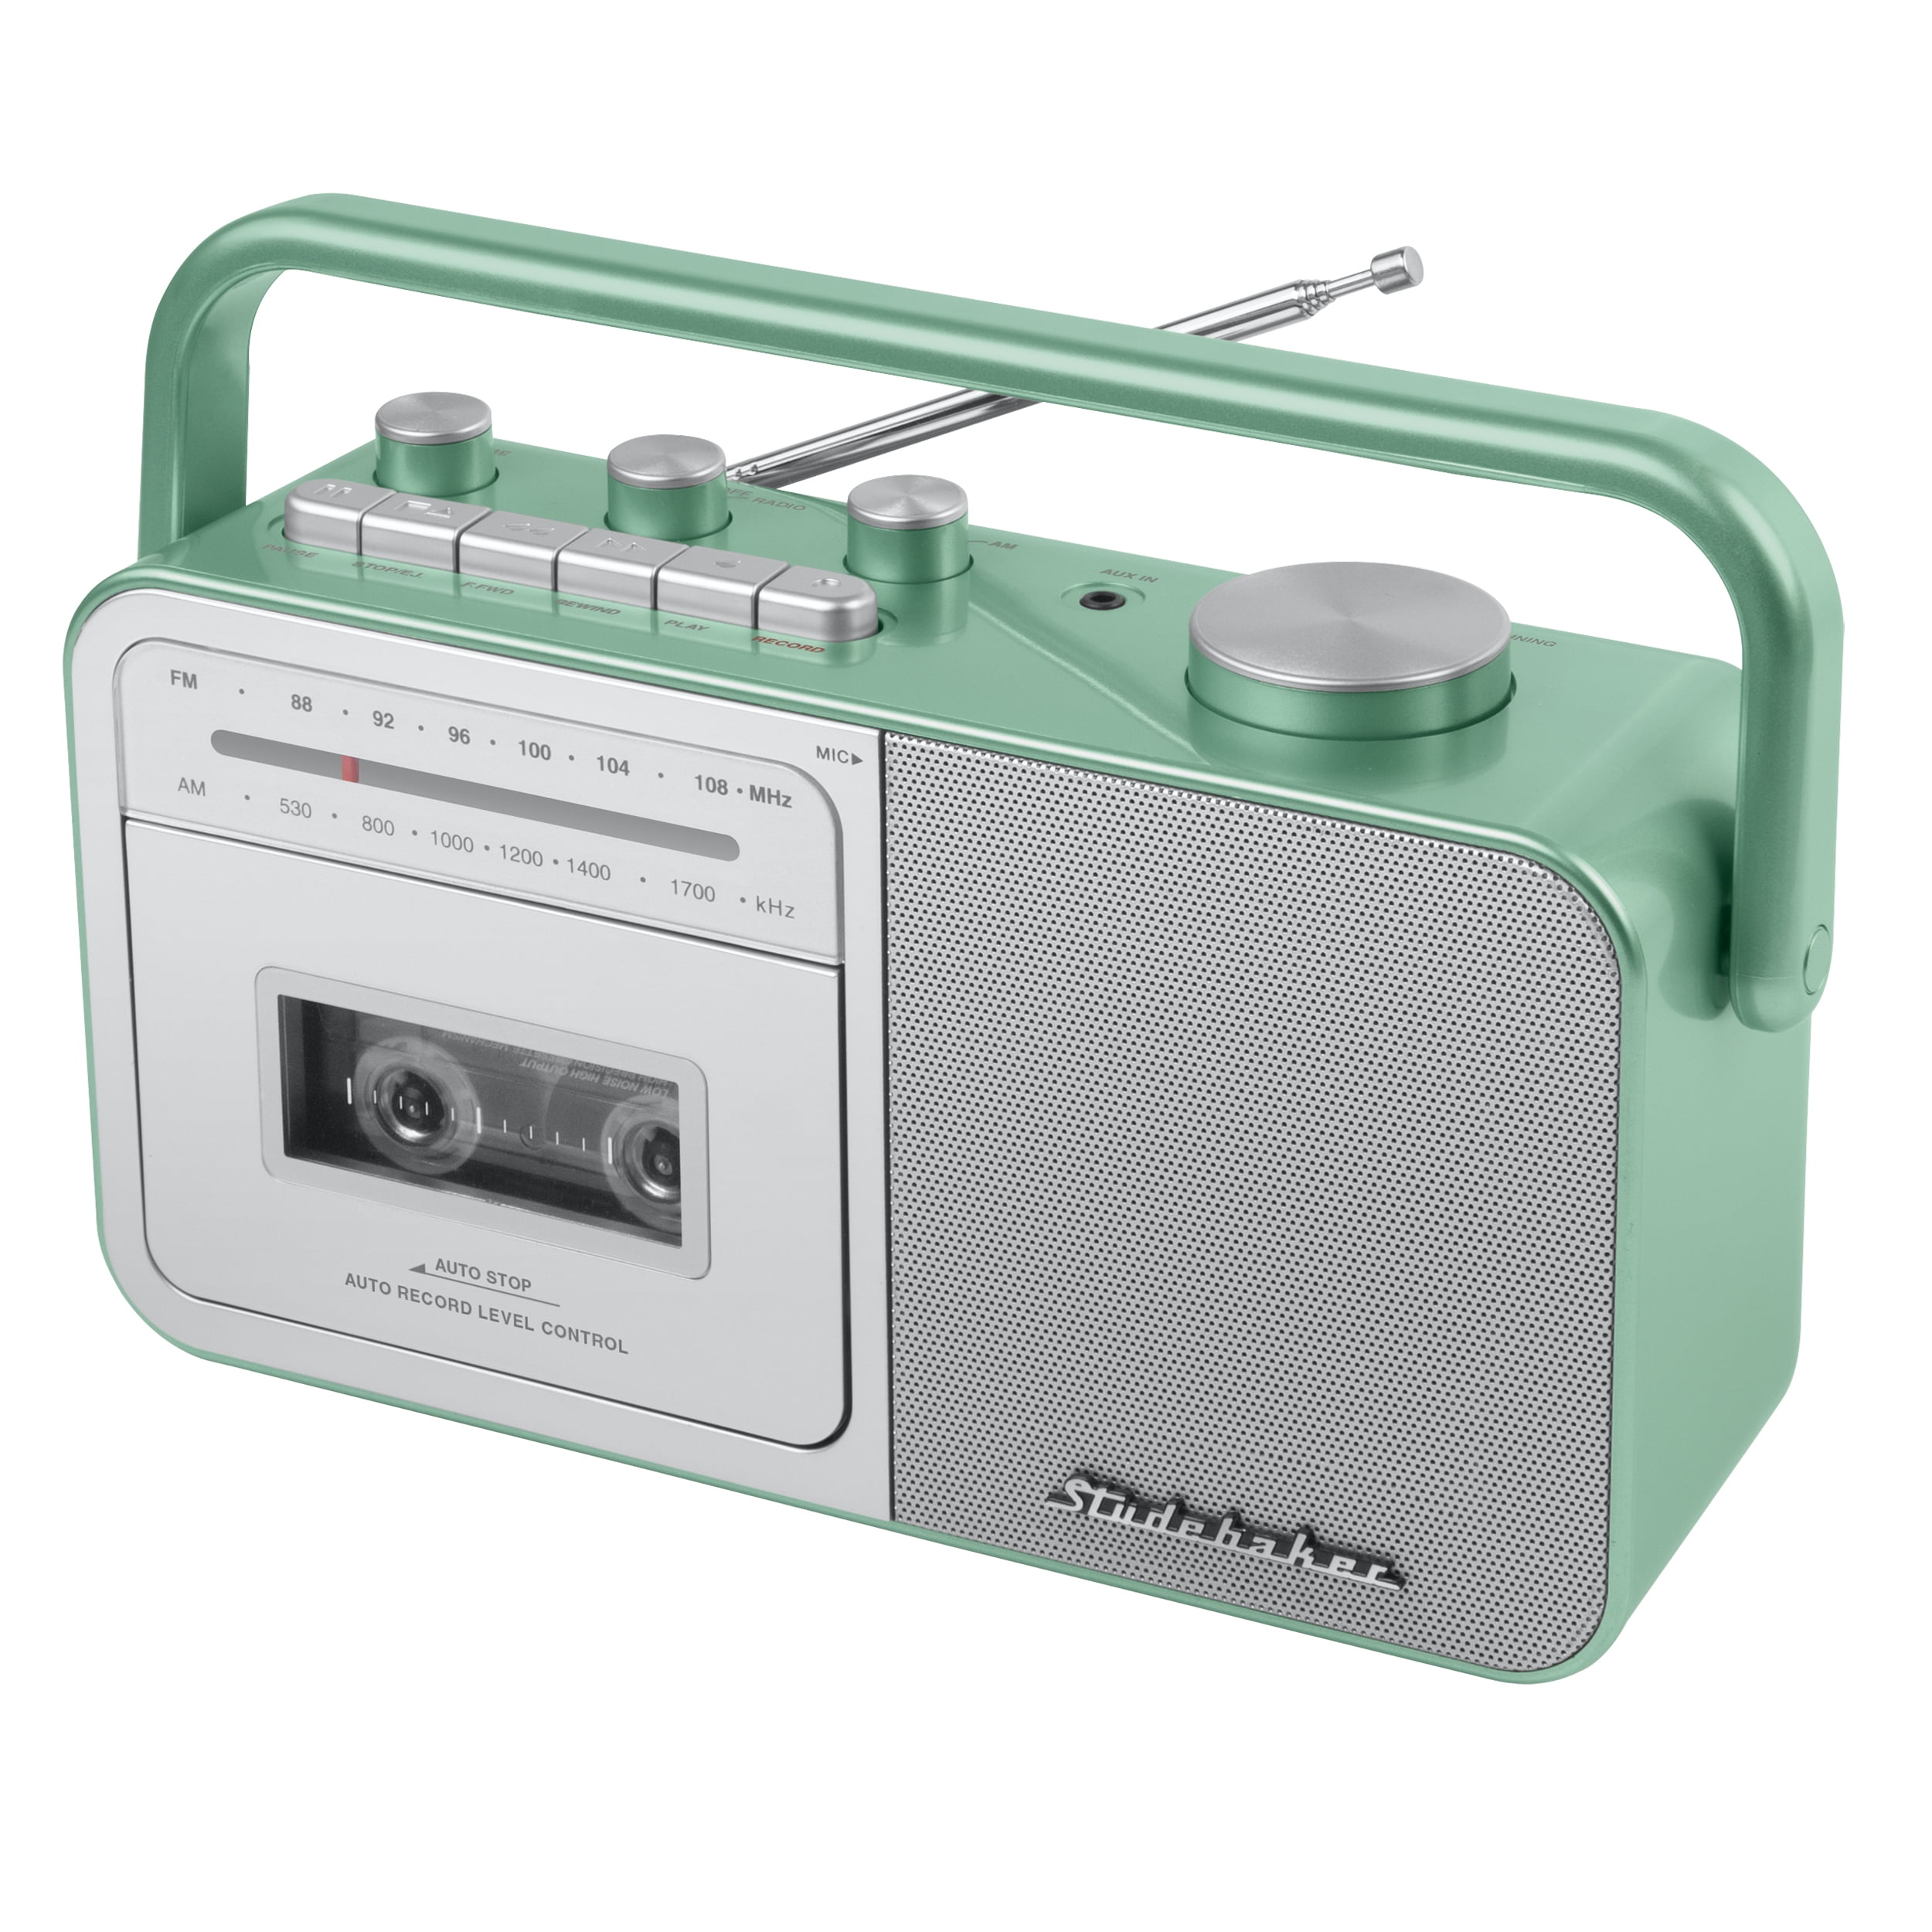 Studebaker SB2130CS Portable Cassette Player/Recorder with AM/FM Radio -  